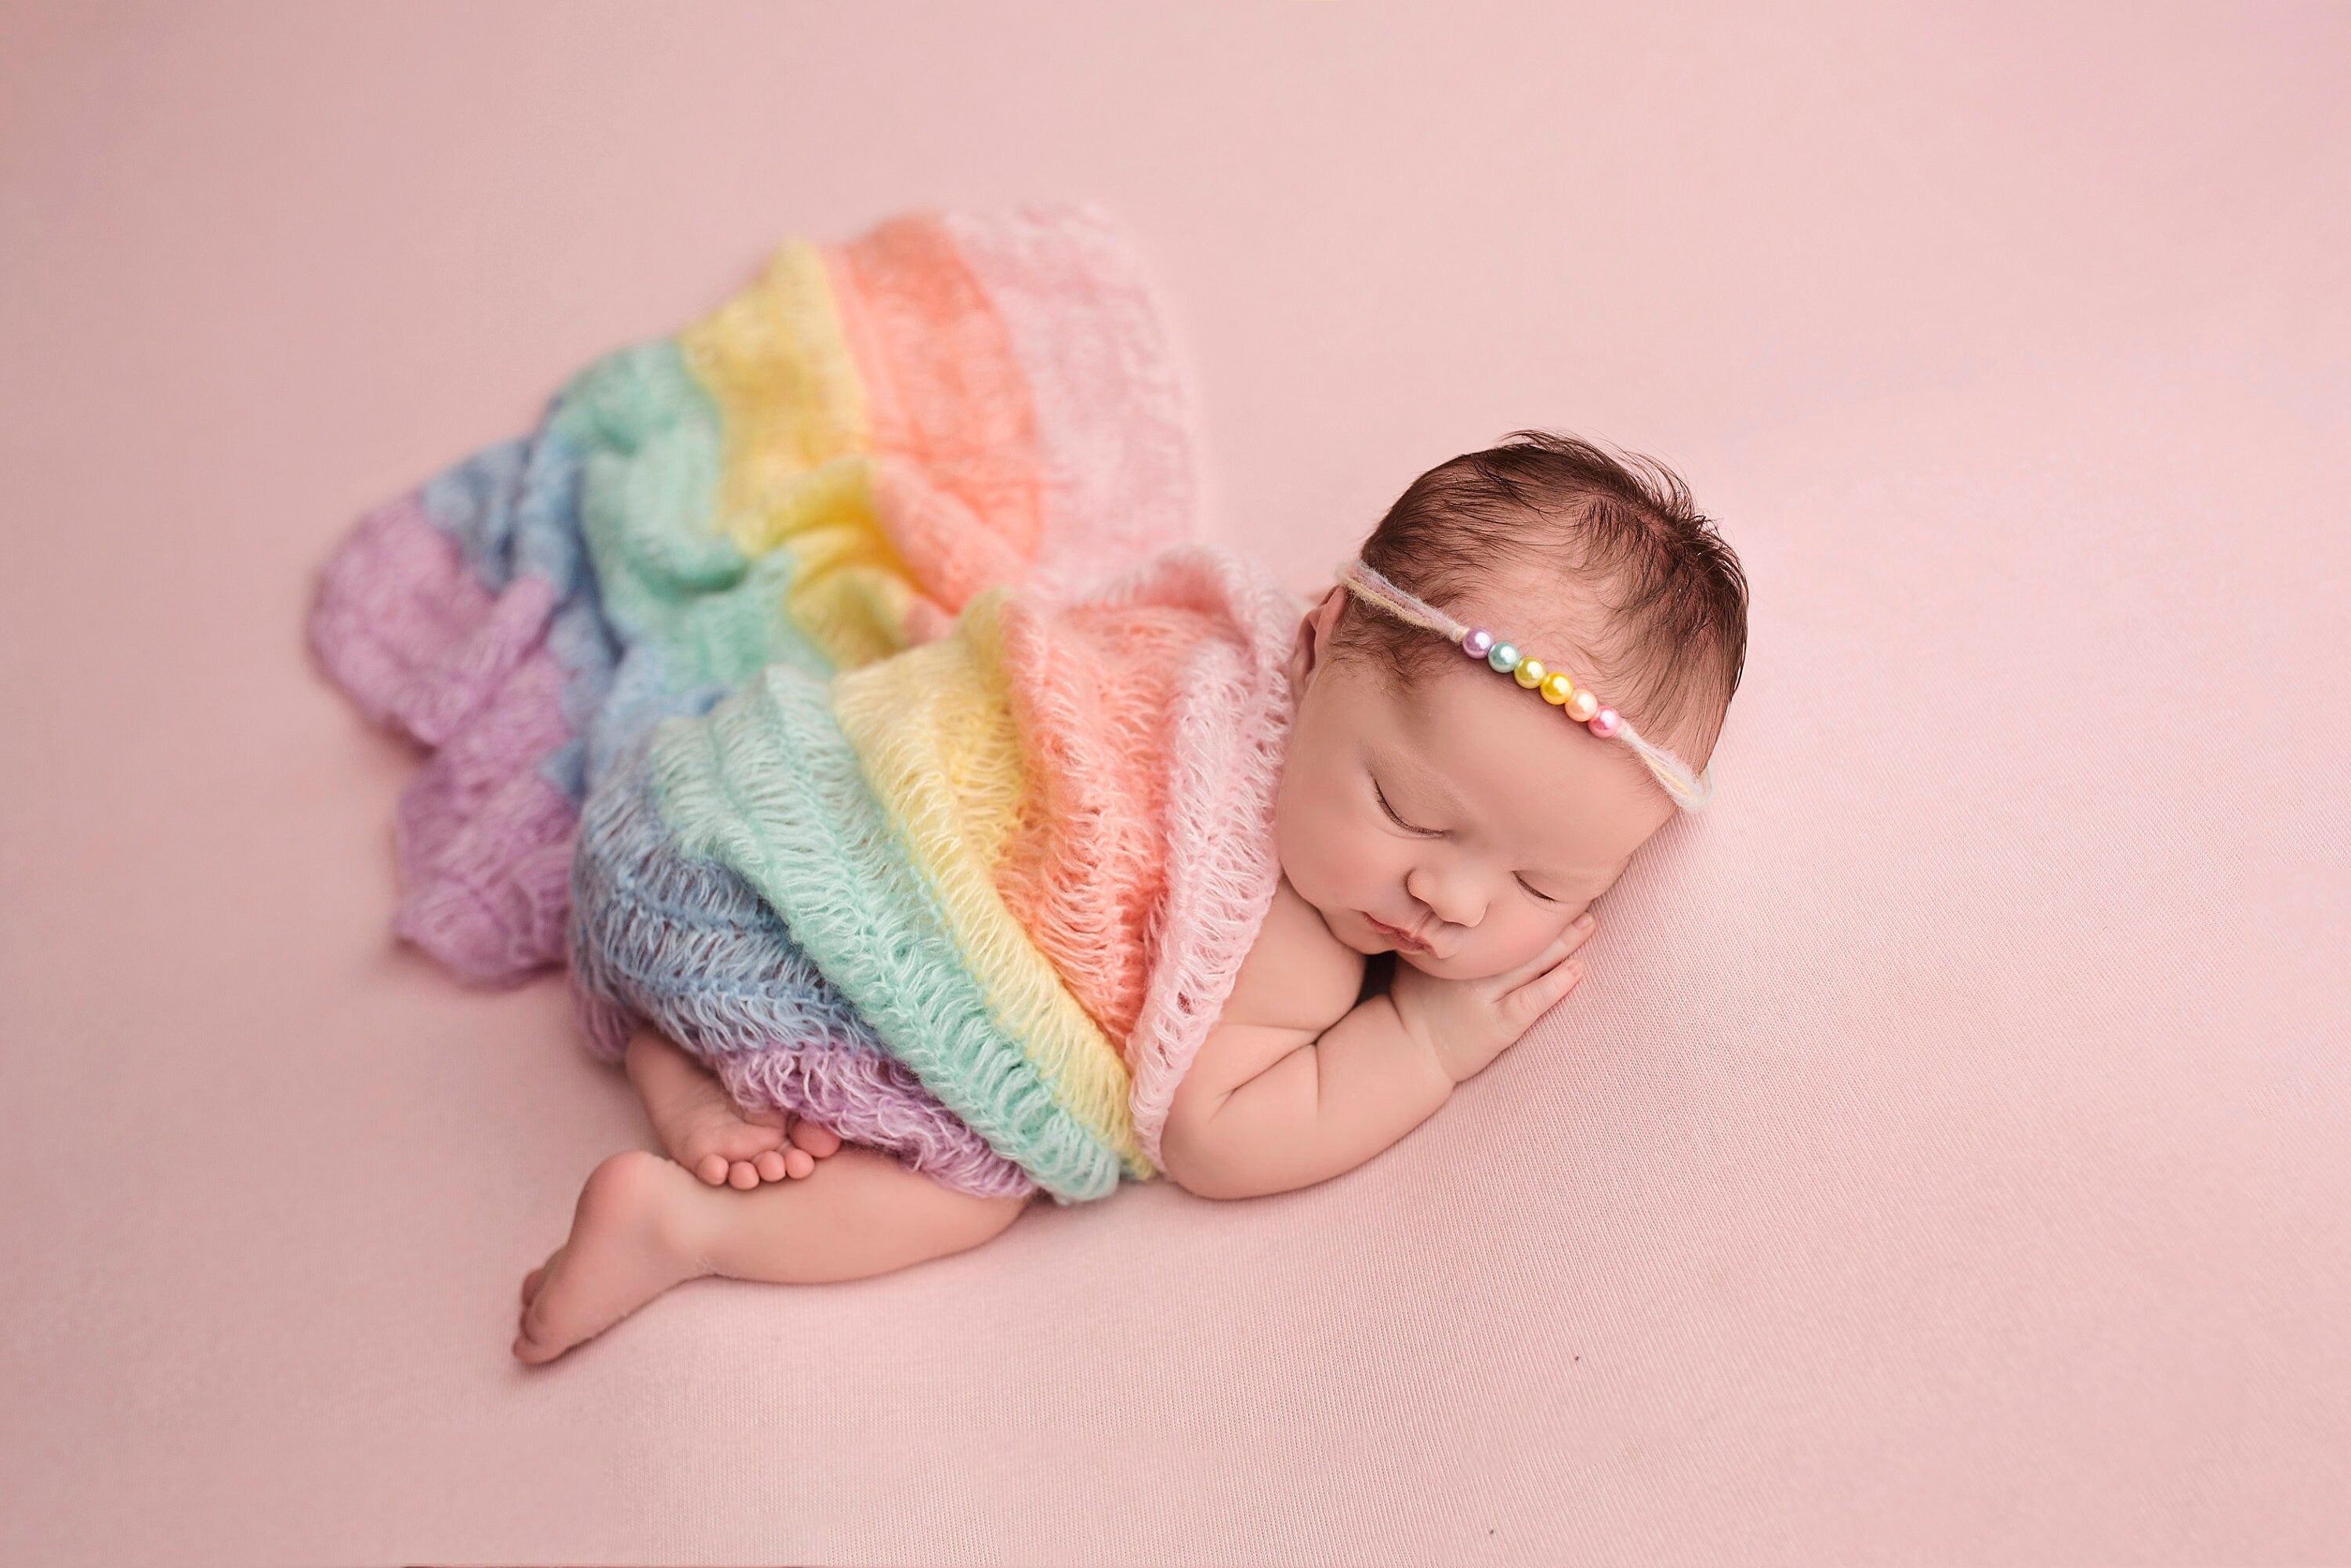 Newborn Wrap Rainbow Baby, Rainbow Baby Photo Prop, Rainbow Baby Newborn Prop, Rainbow Baby Wrap, Rainbow Wrap Newborn Photos, Mohair